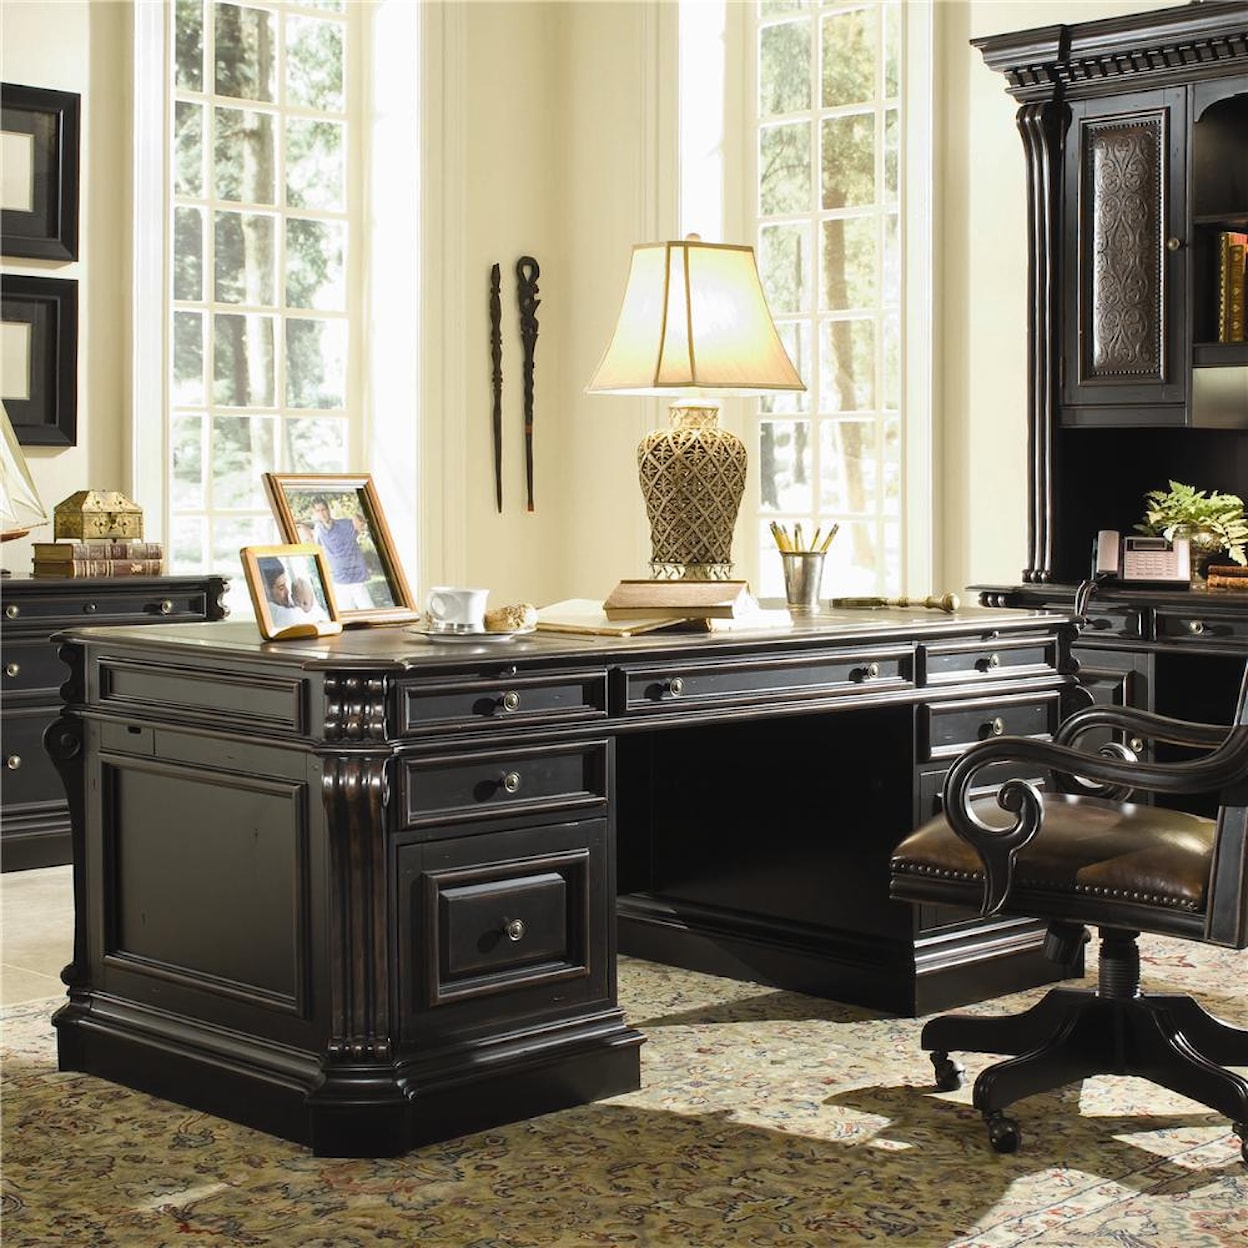 Hooker Furniture Telluride Executive Desk